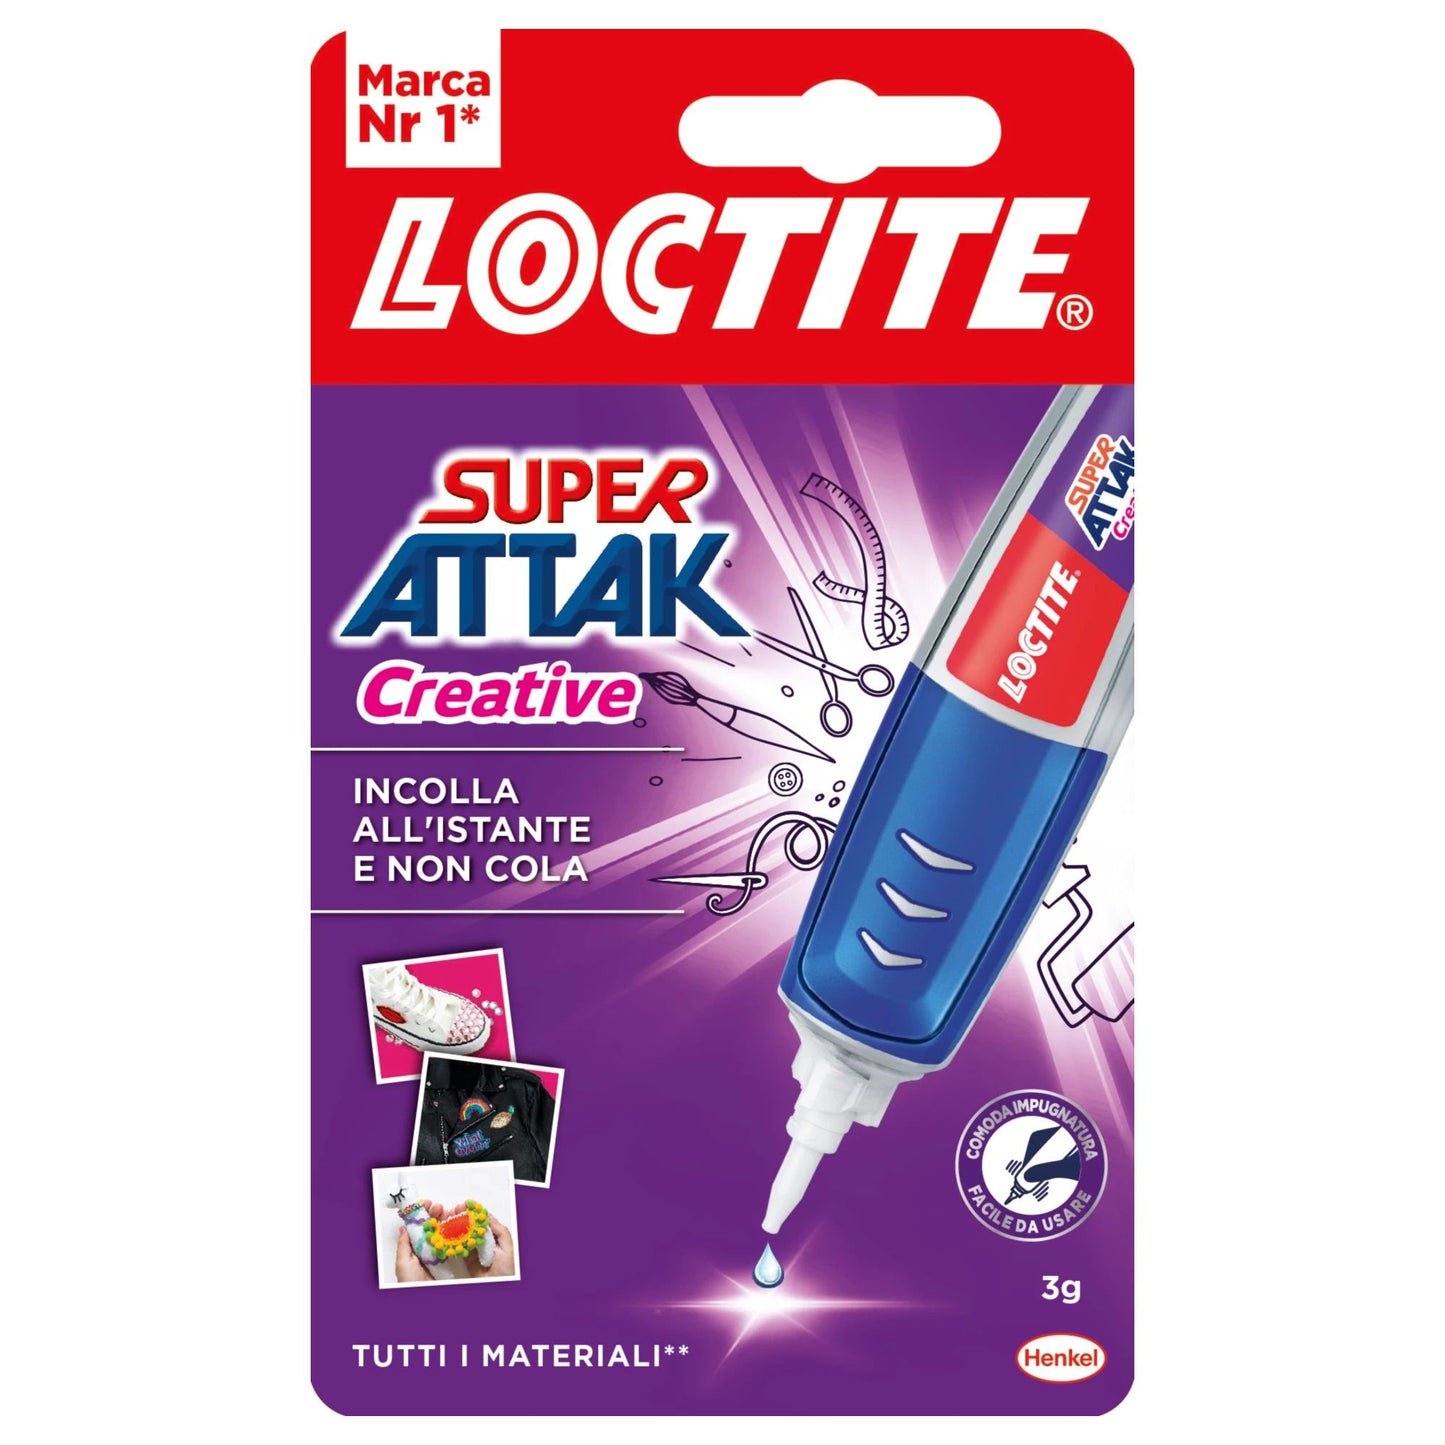 Loctite Super Attak Creative, transparent liquid glue with pen applicator, strong glue for easy and precise applications, 3g glue stick